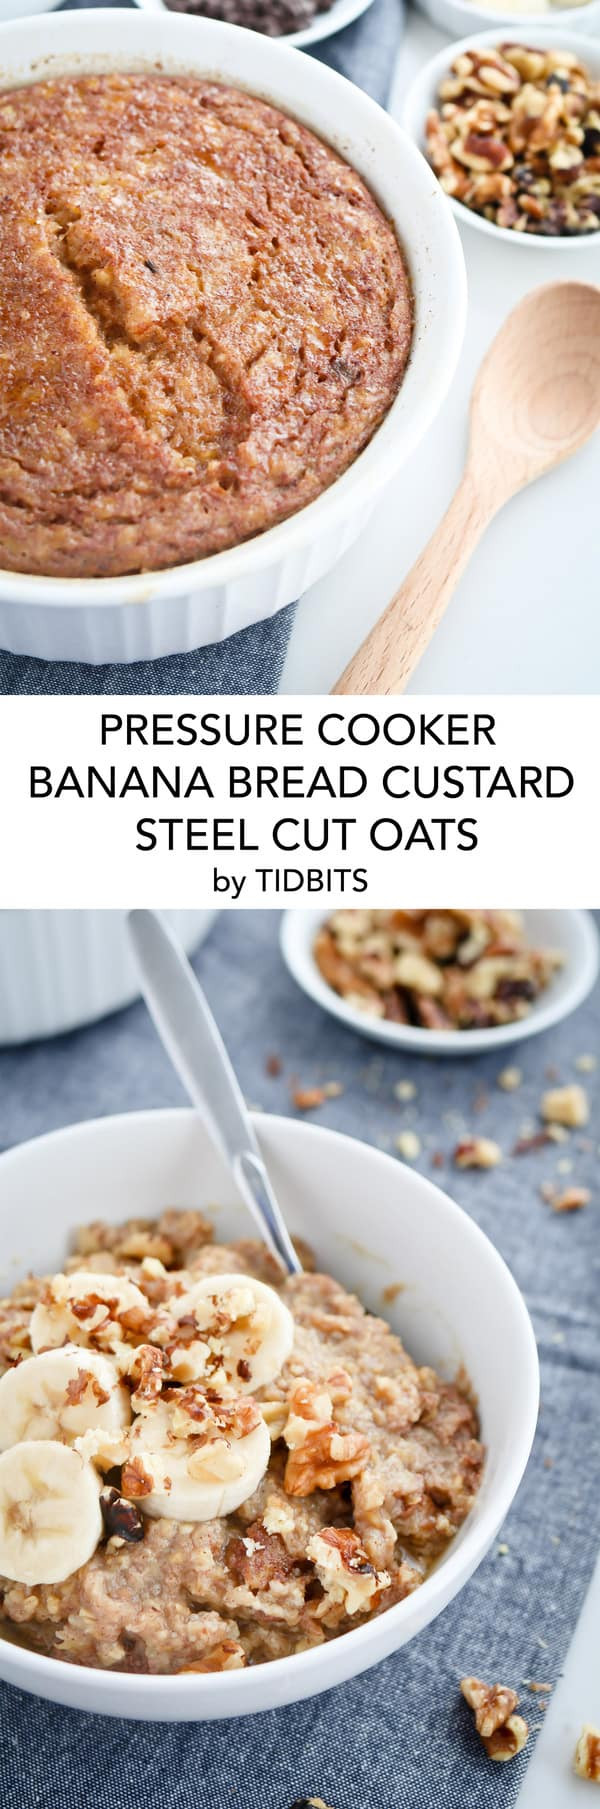 Steel Cut Oats In Pressure Cooker
 Instant Pot Pressure Cooker Banana Custard Steel Cut Oats